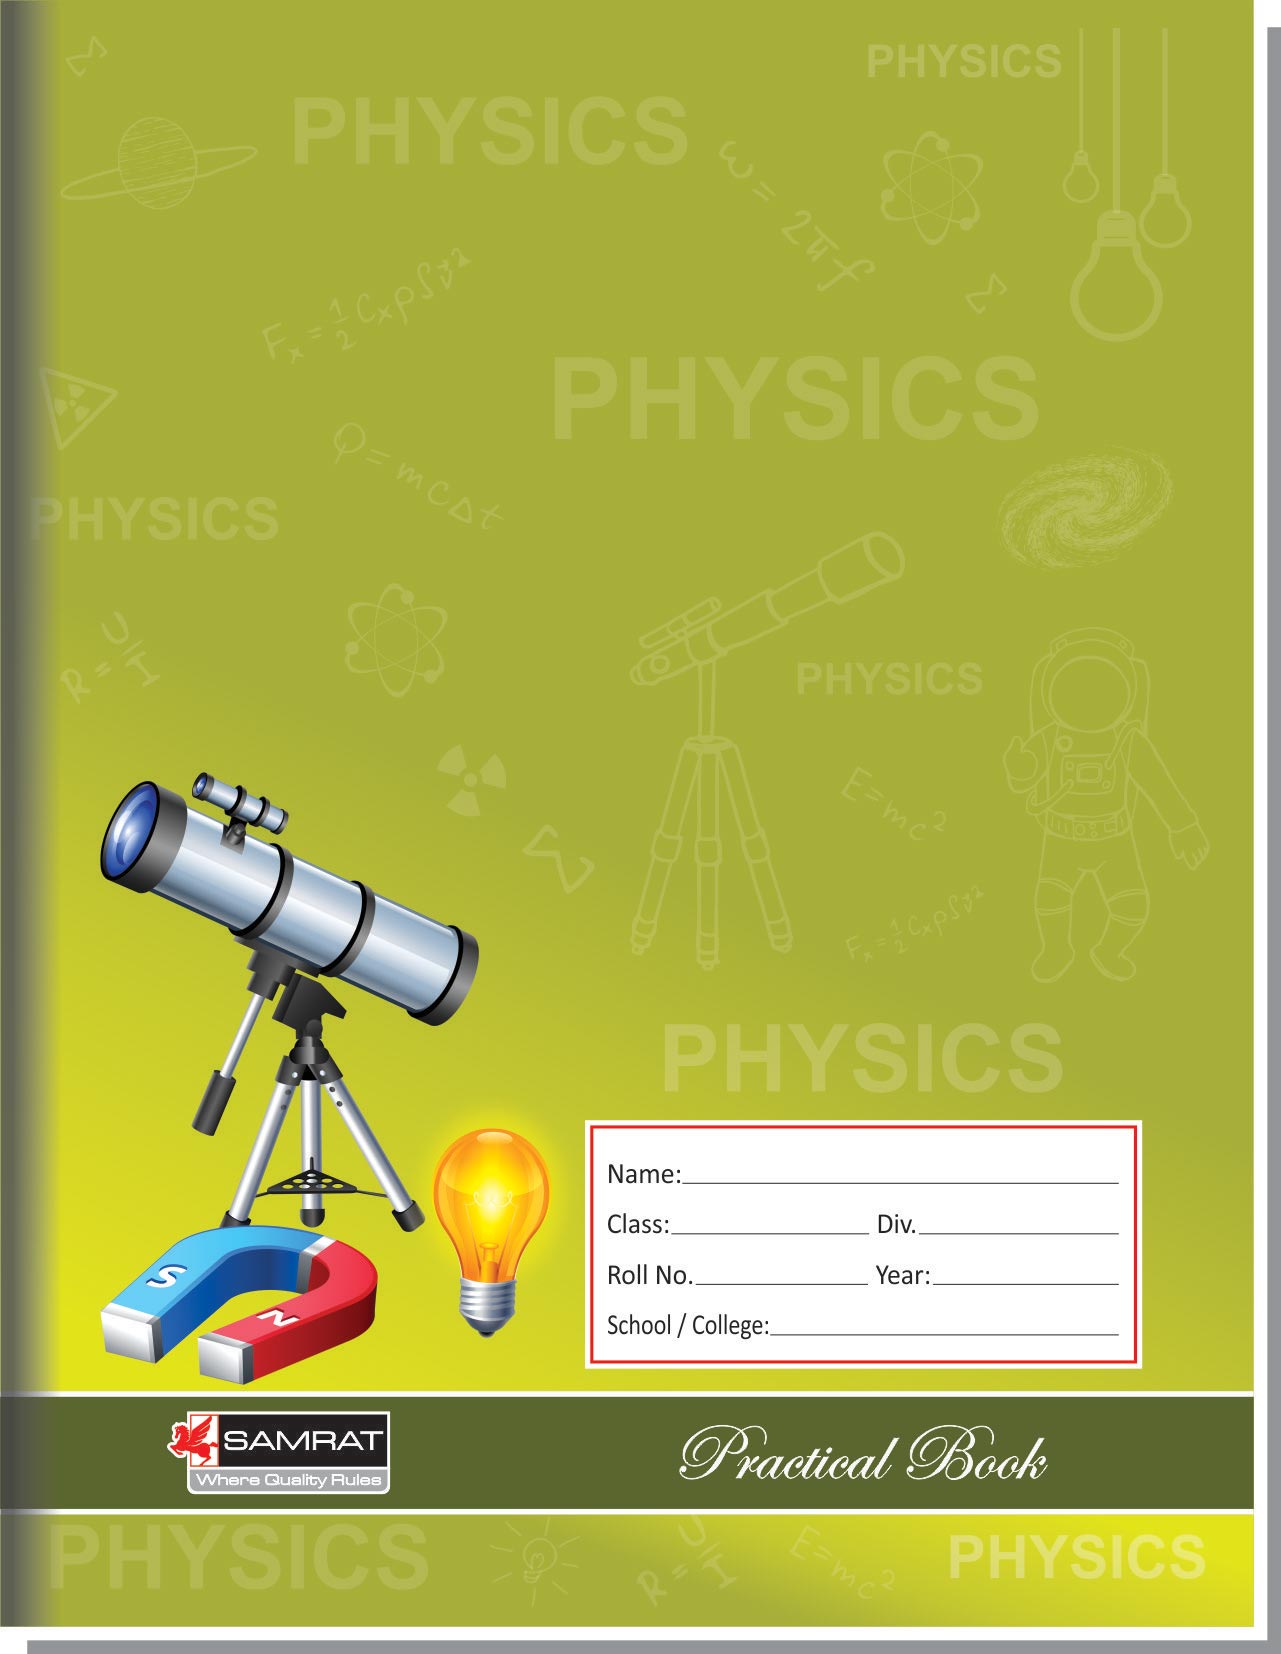 Physics Journal